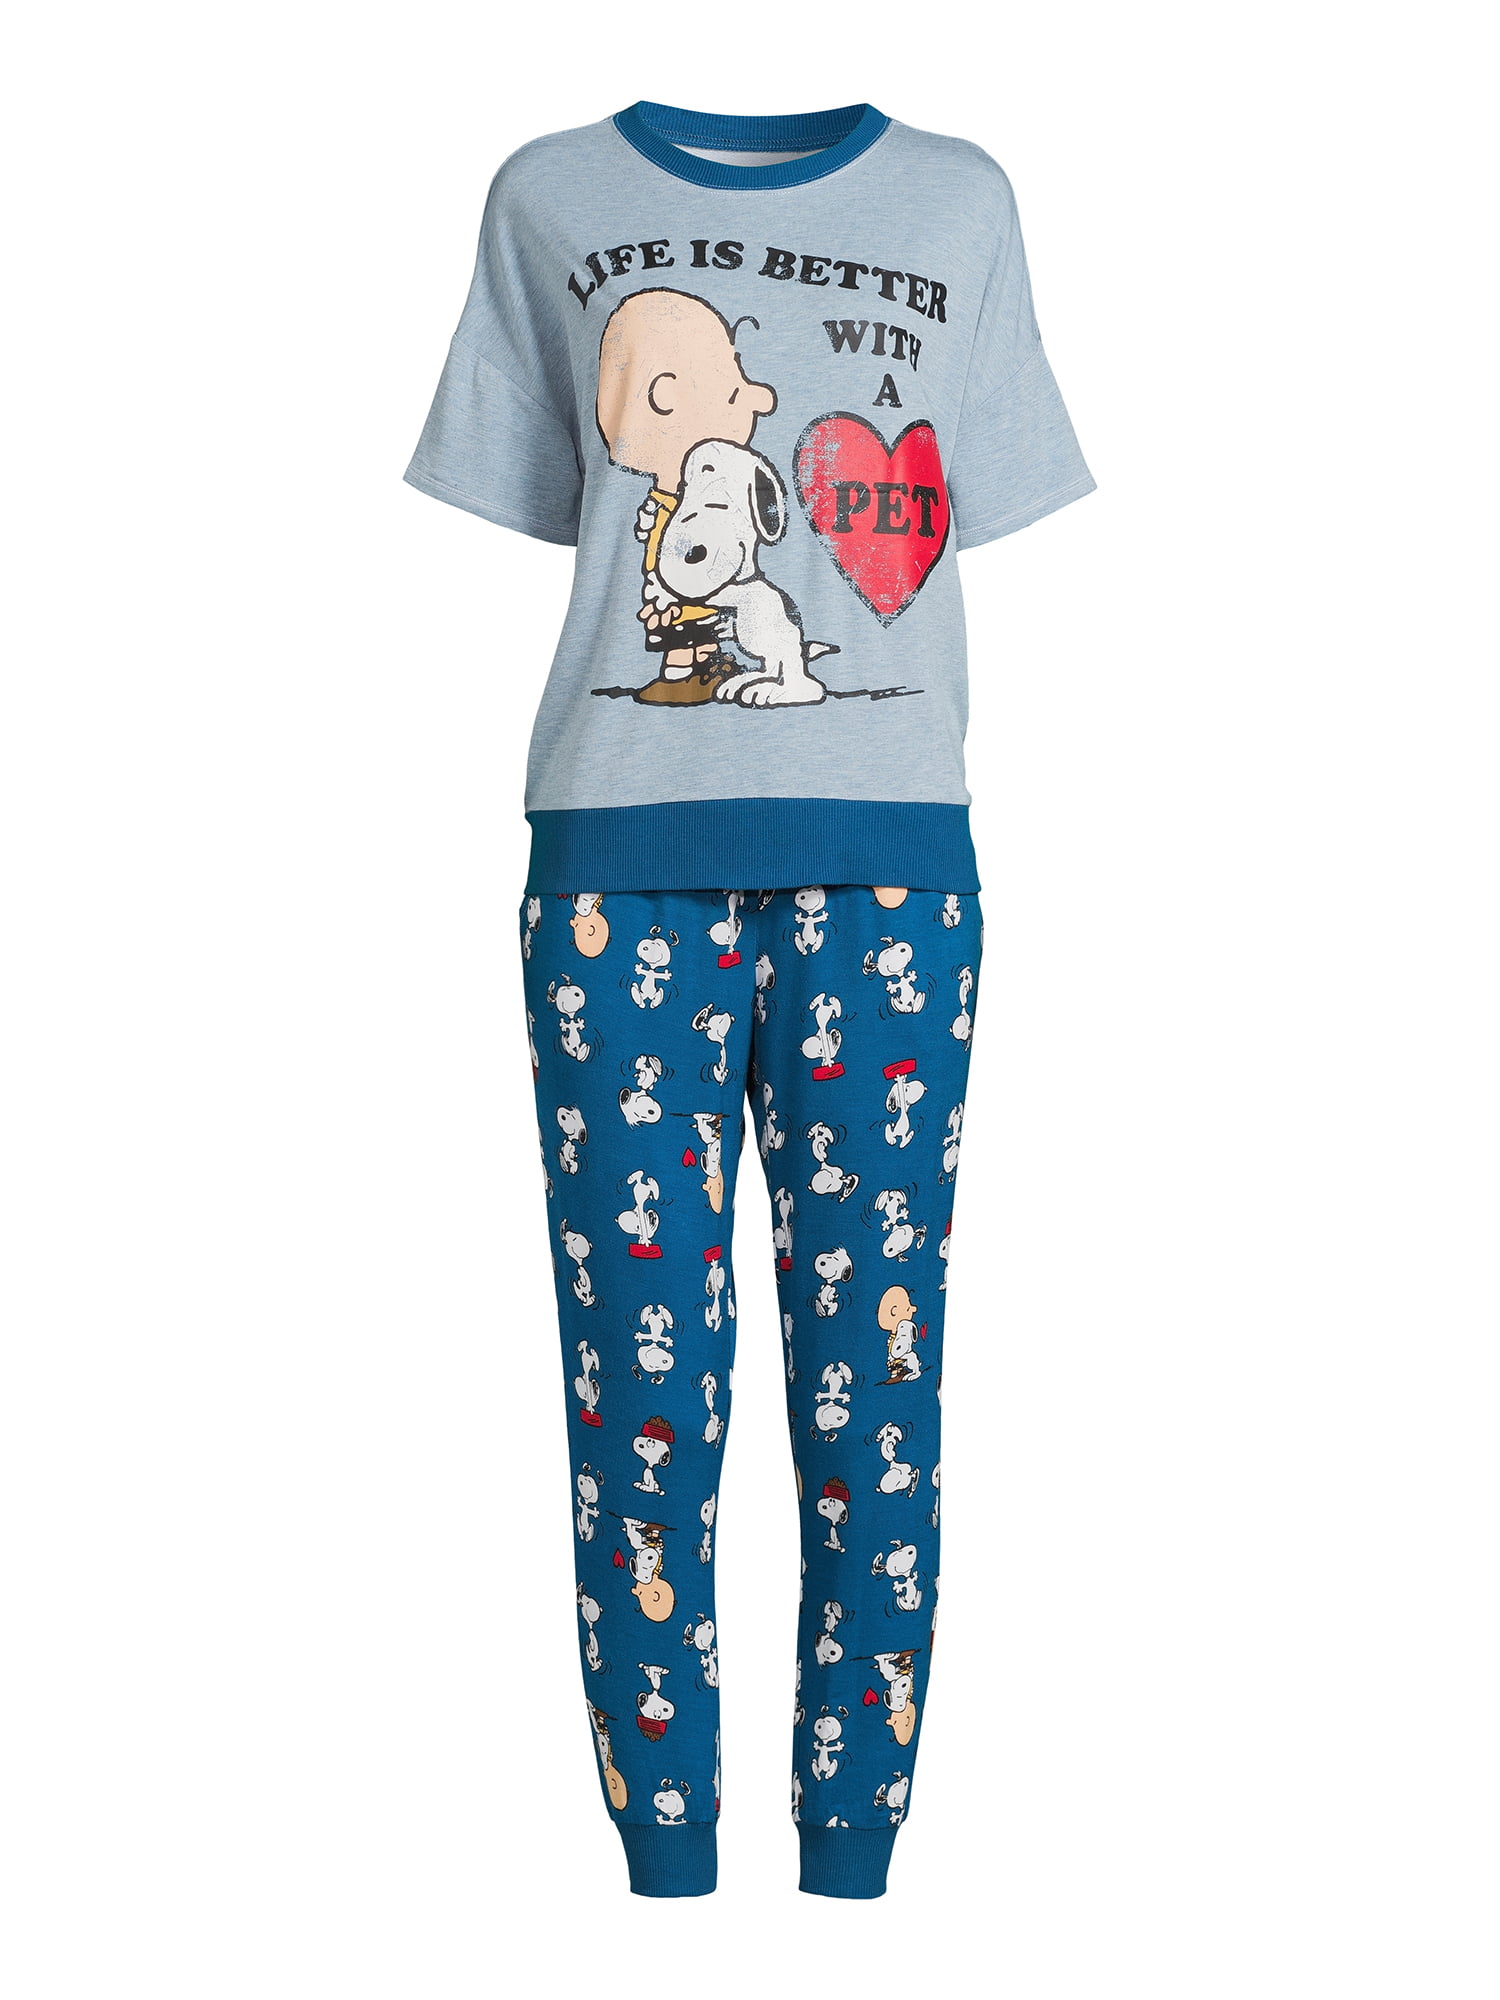 Peanuts Women's Snoopy Pajama Set, 2-Piece